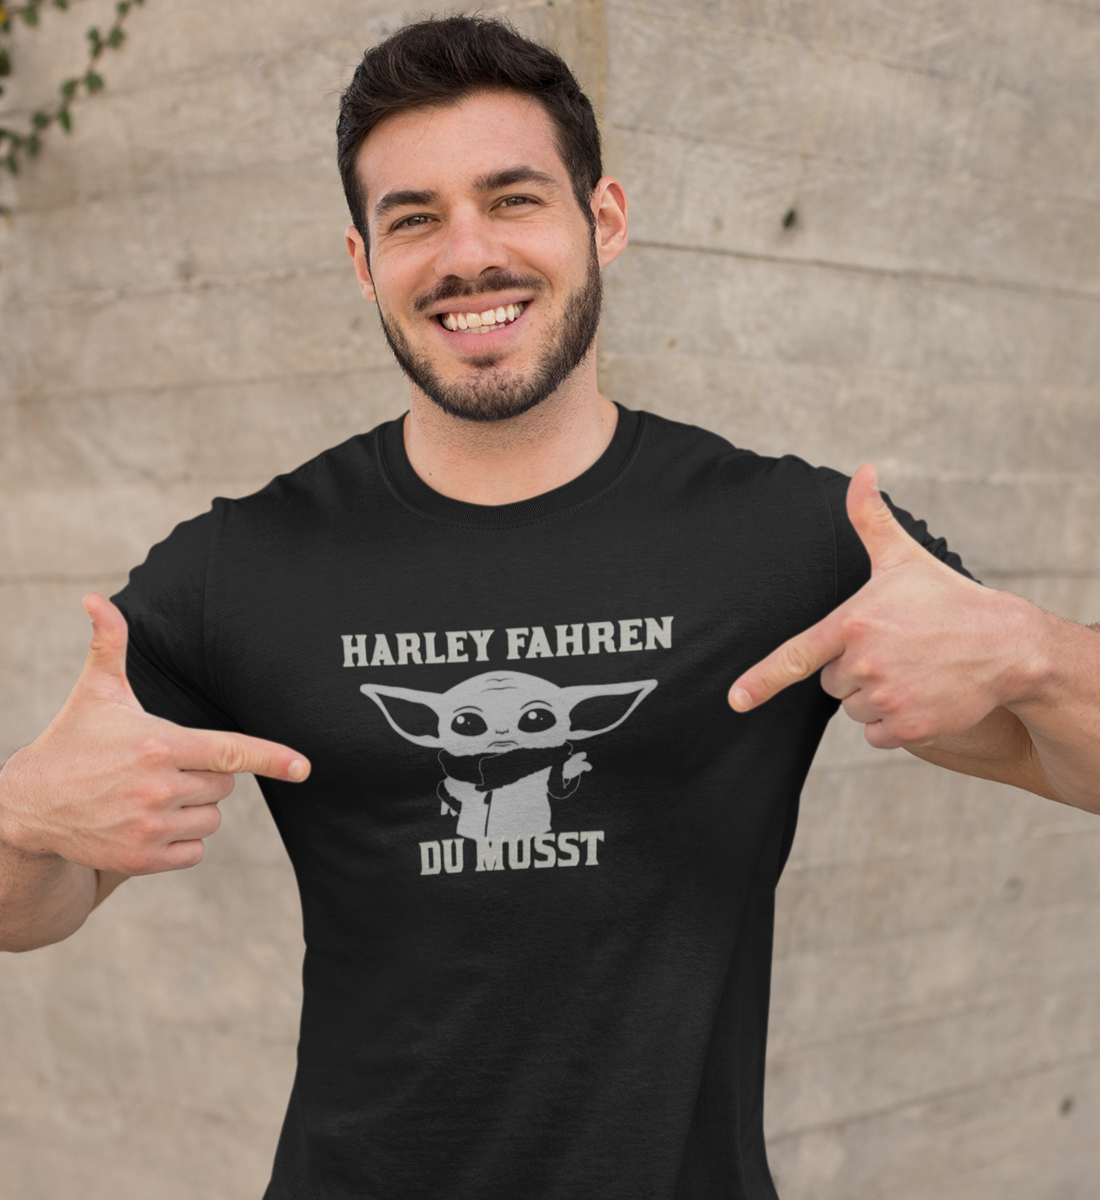 Harley fahren du musst - Herren T-Shirt